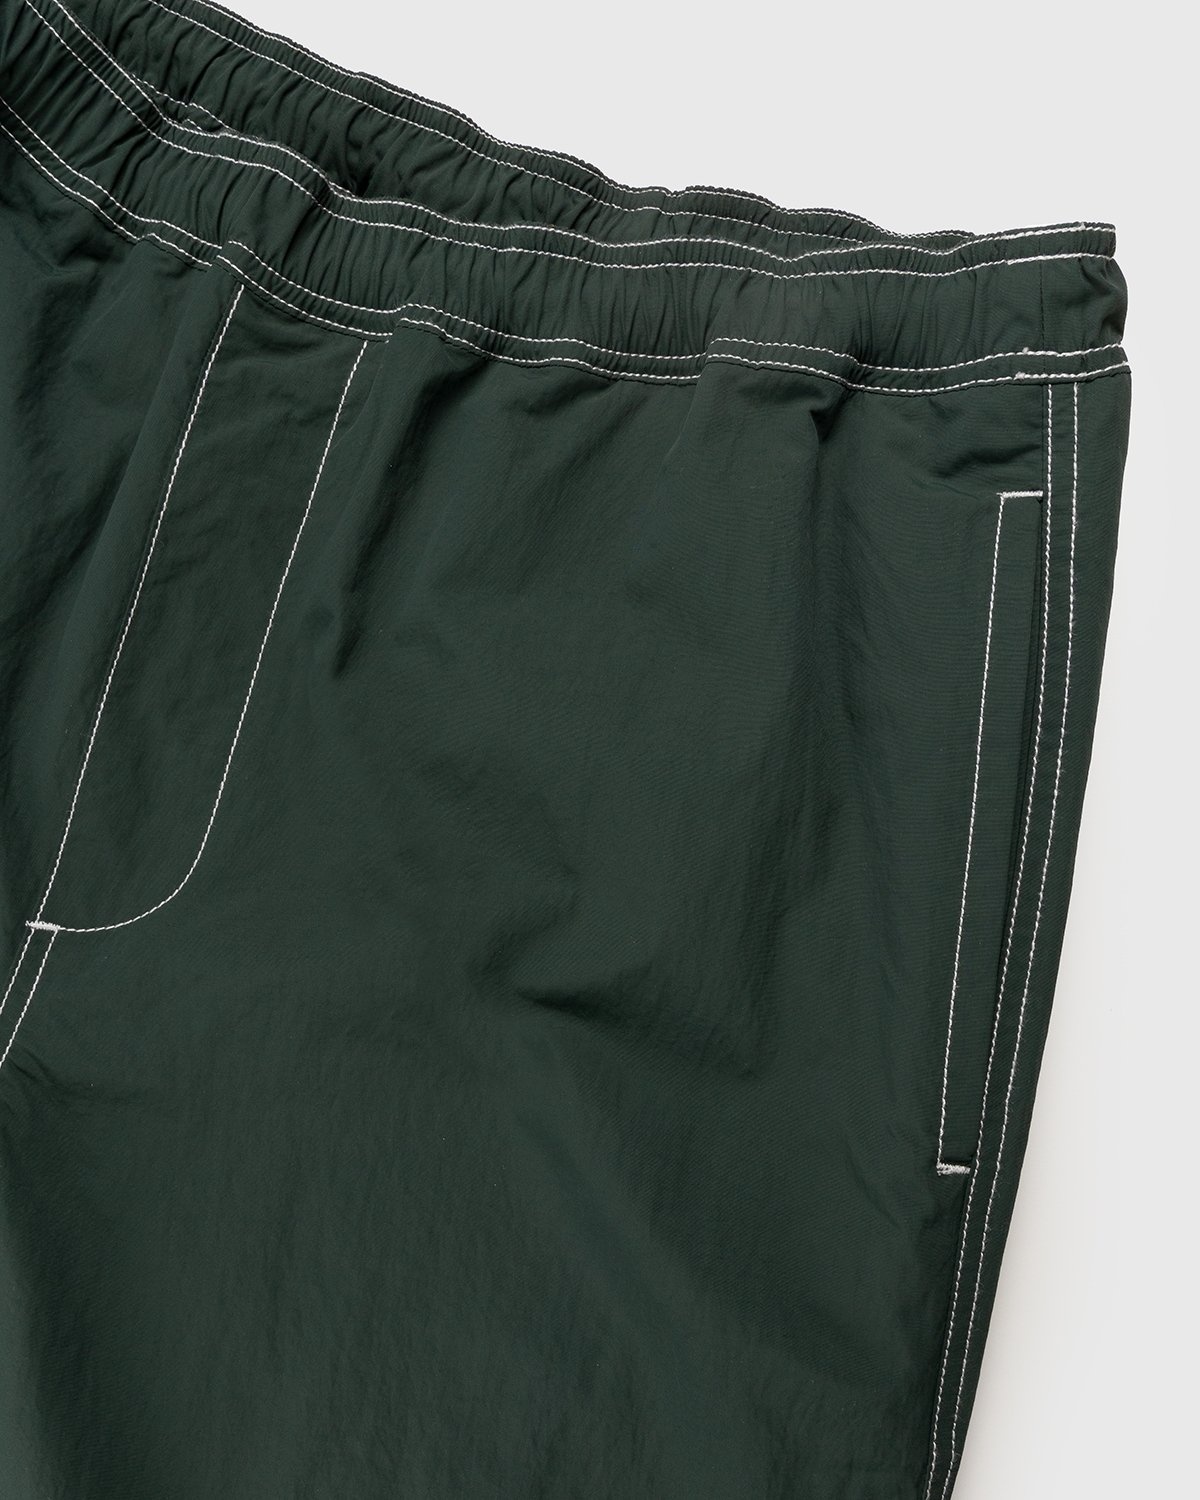 Highsnobiety – Contrast Brushed Nylon Elastic Pants Green - Pants - Green - Image 5